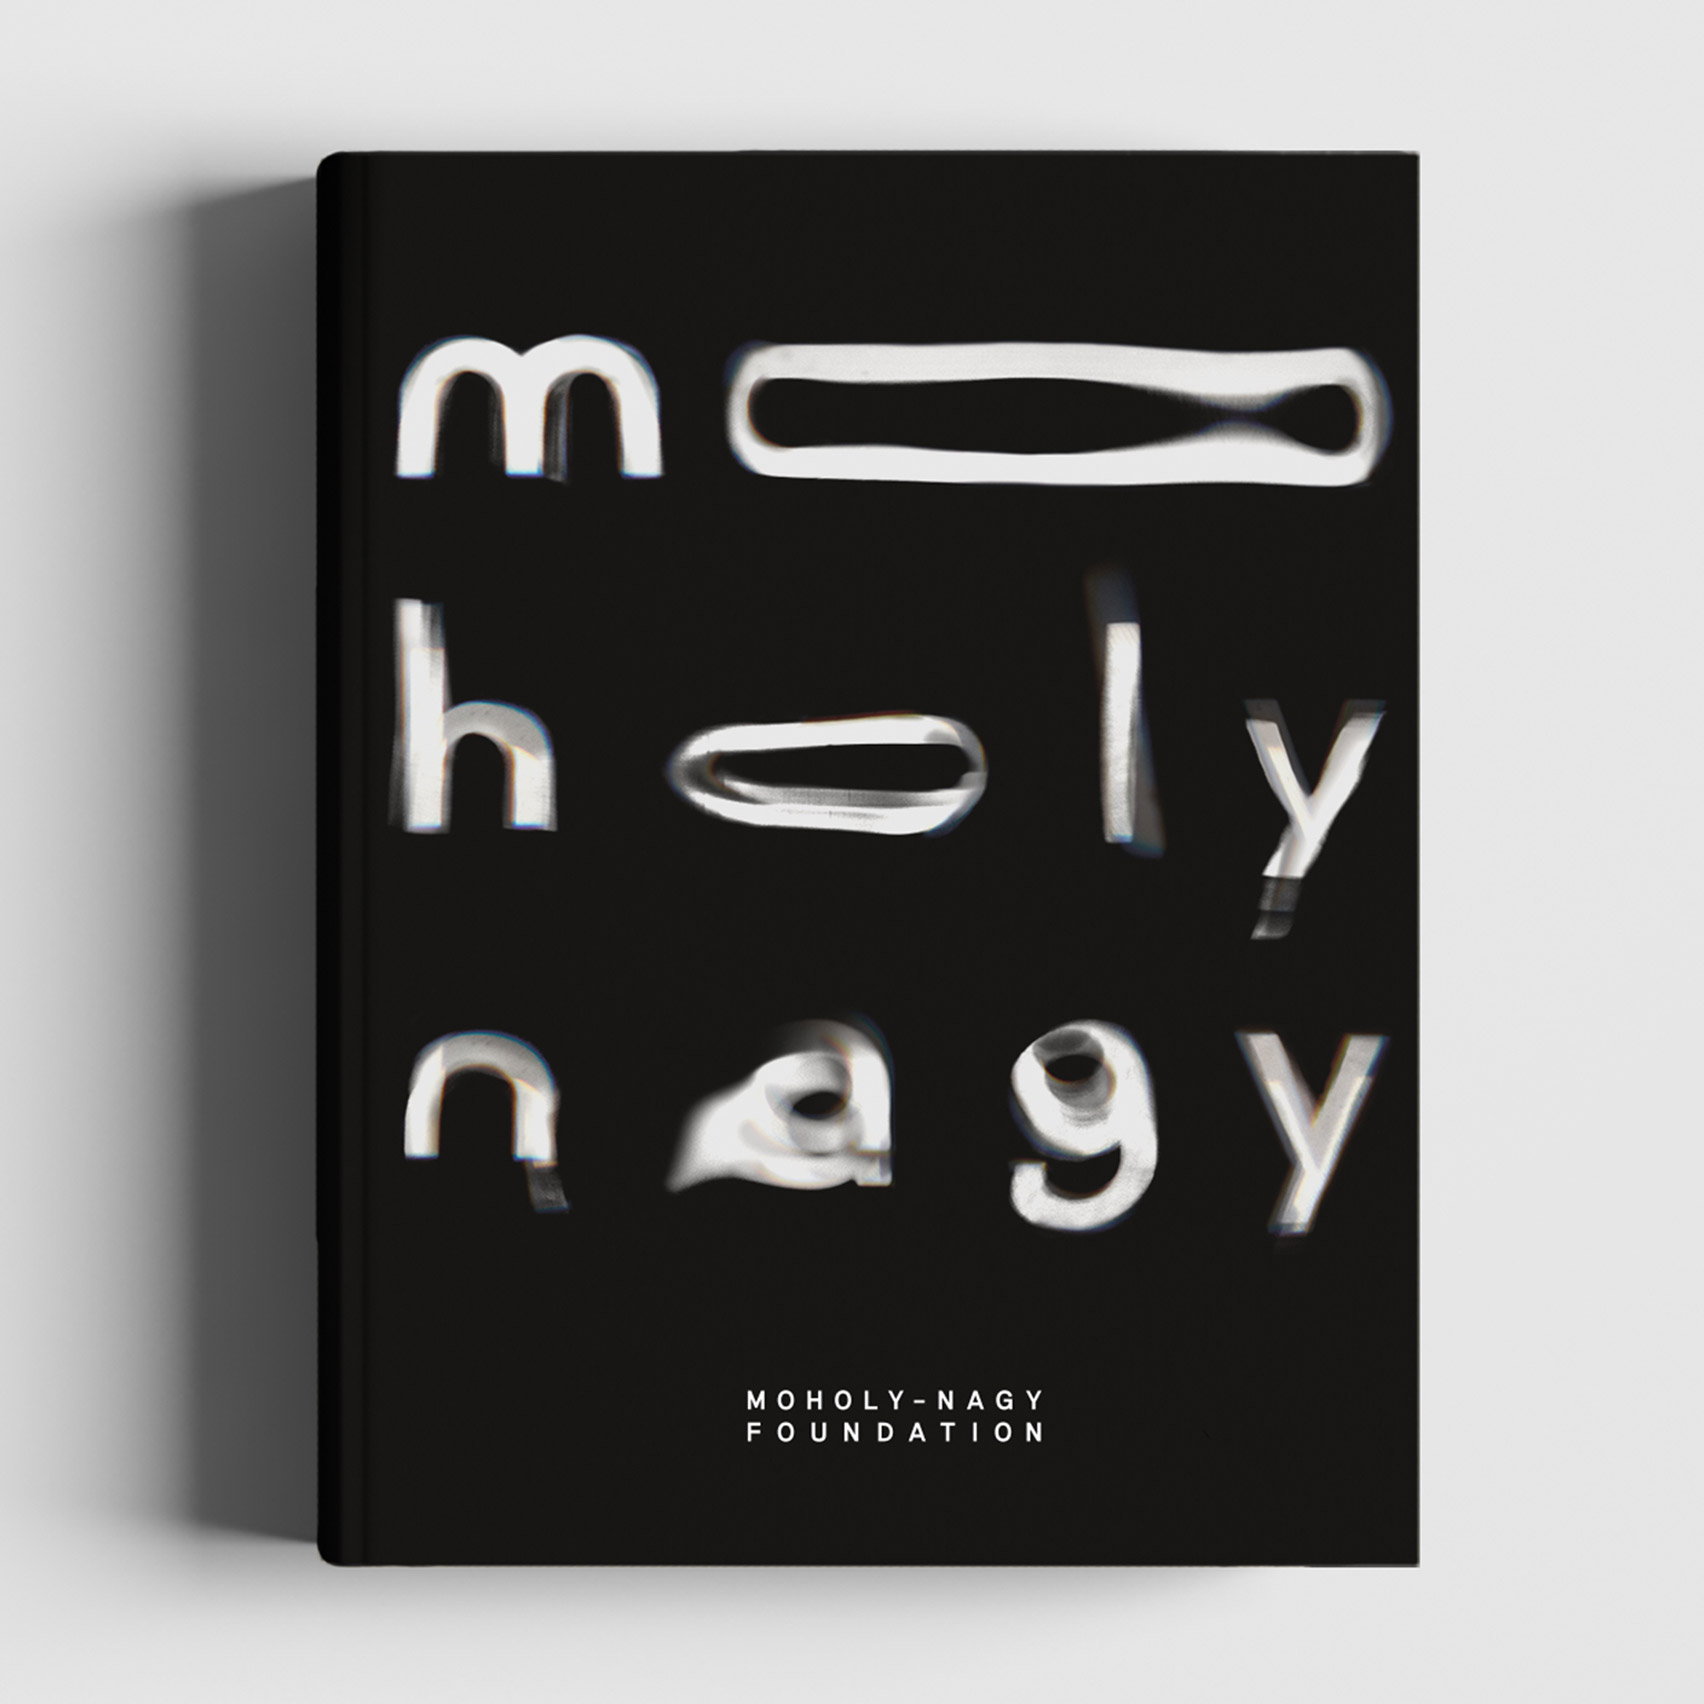 Pentagram's brand identity for The Moholy-Nagy Foundation